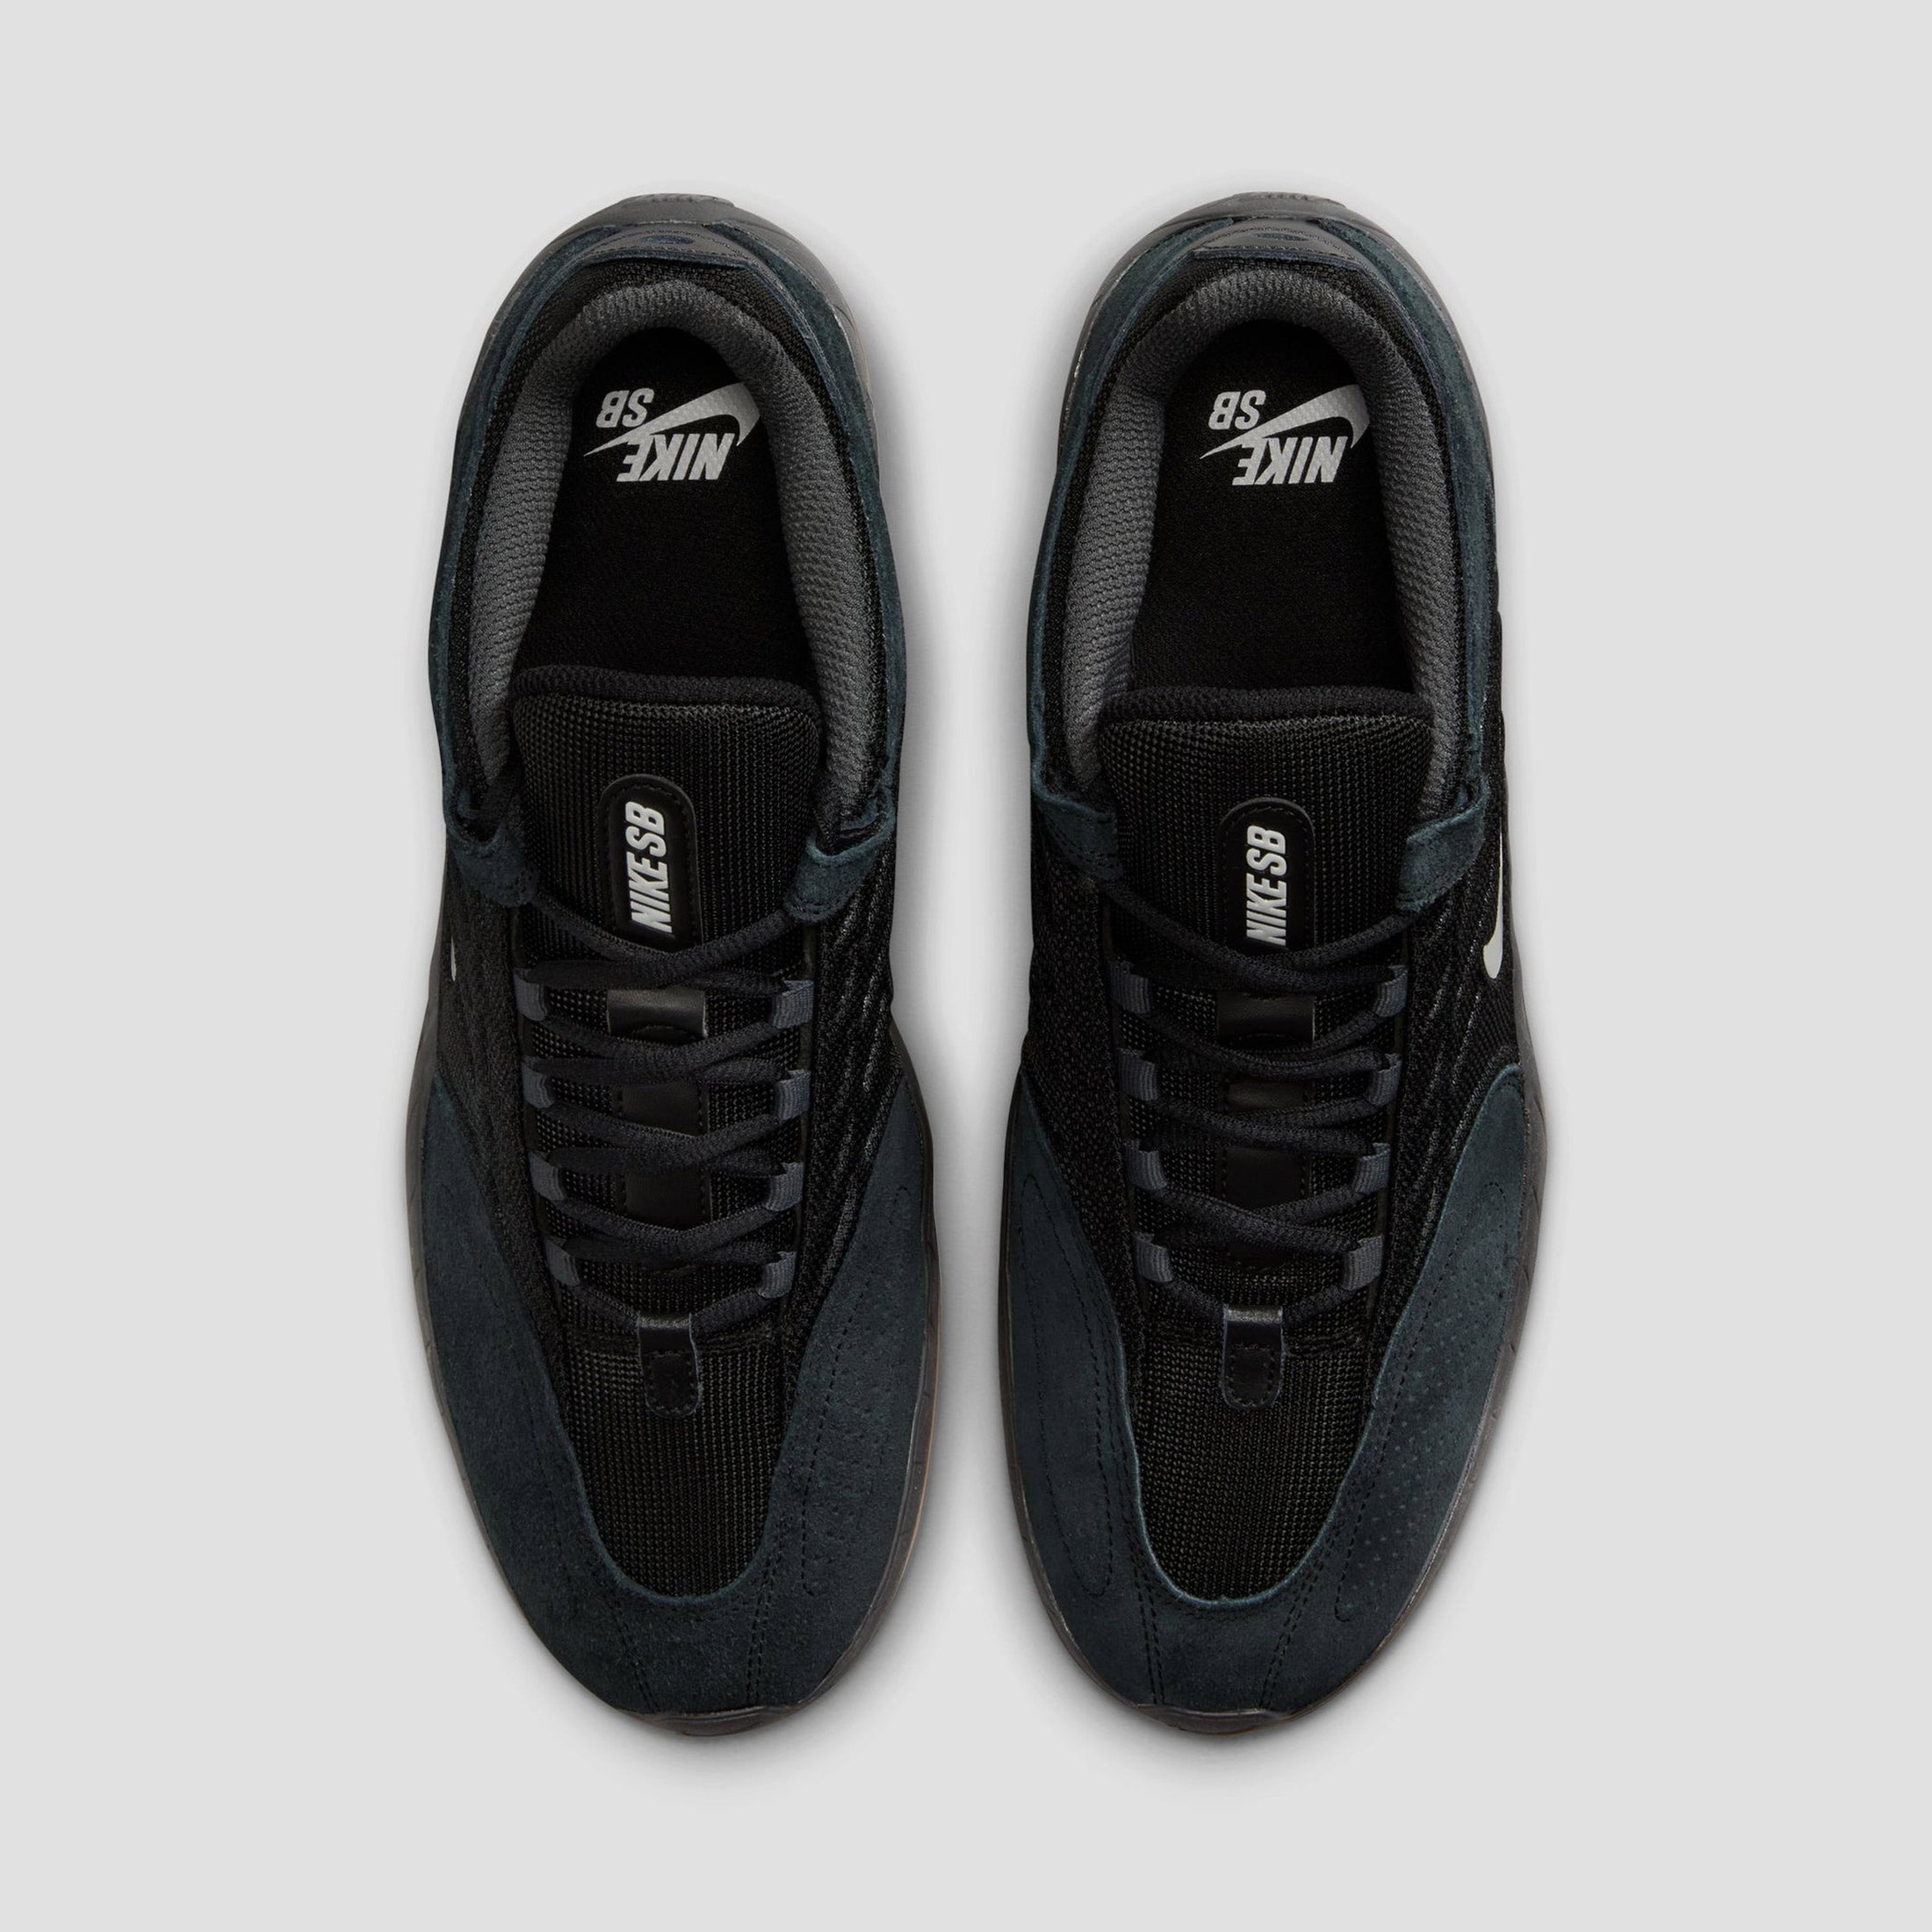 Nike SB Vertebrae Skate Shoes Black / Summit White - Anthracite - Black